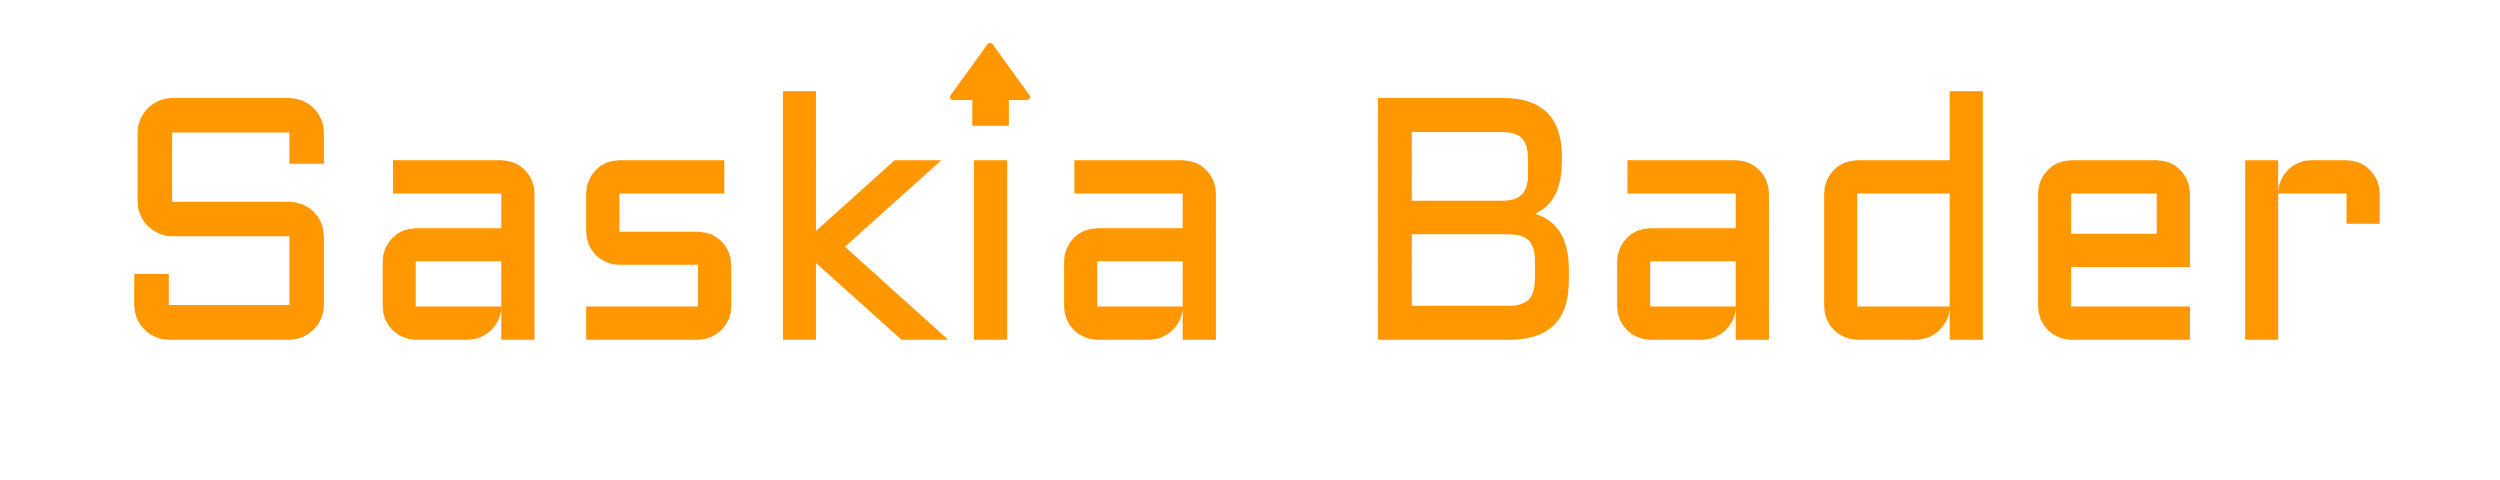 Saskia Bader Logo